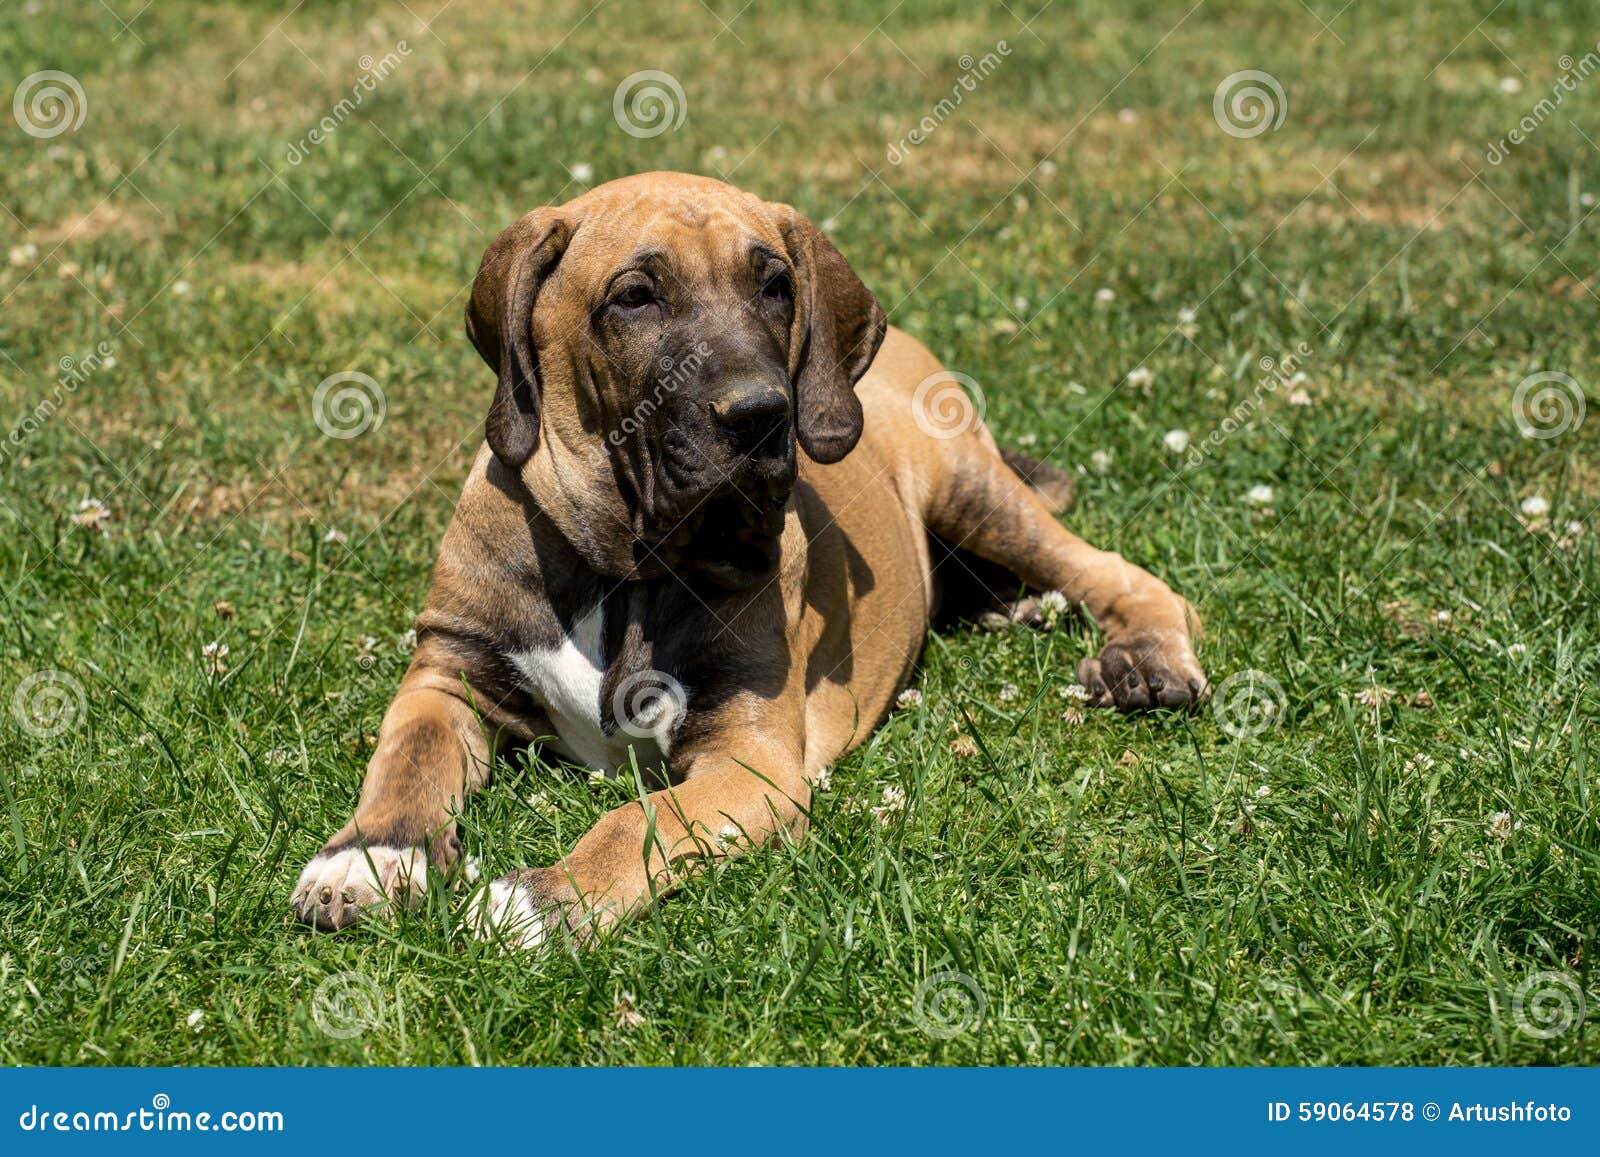 puppy of fila brasileiro (brazilian mastiff)